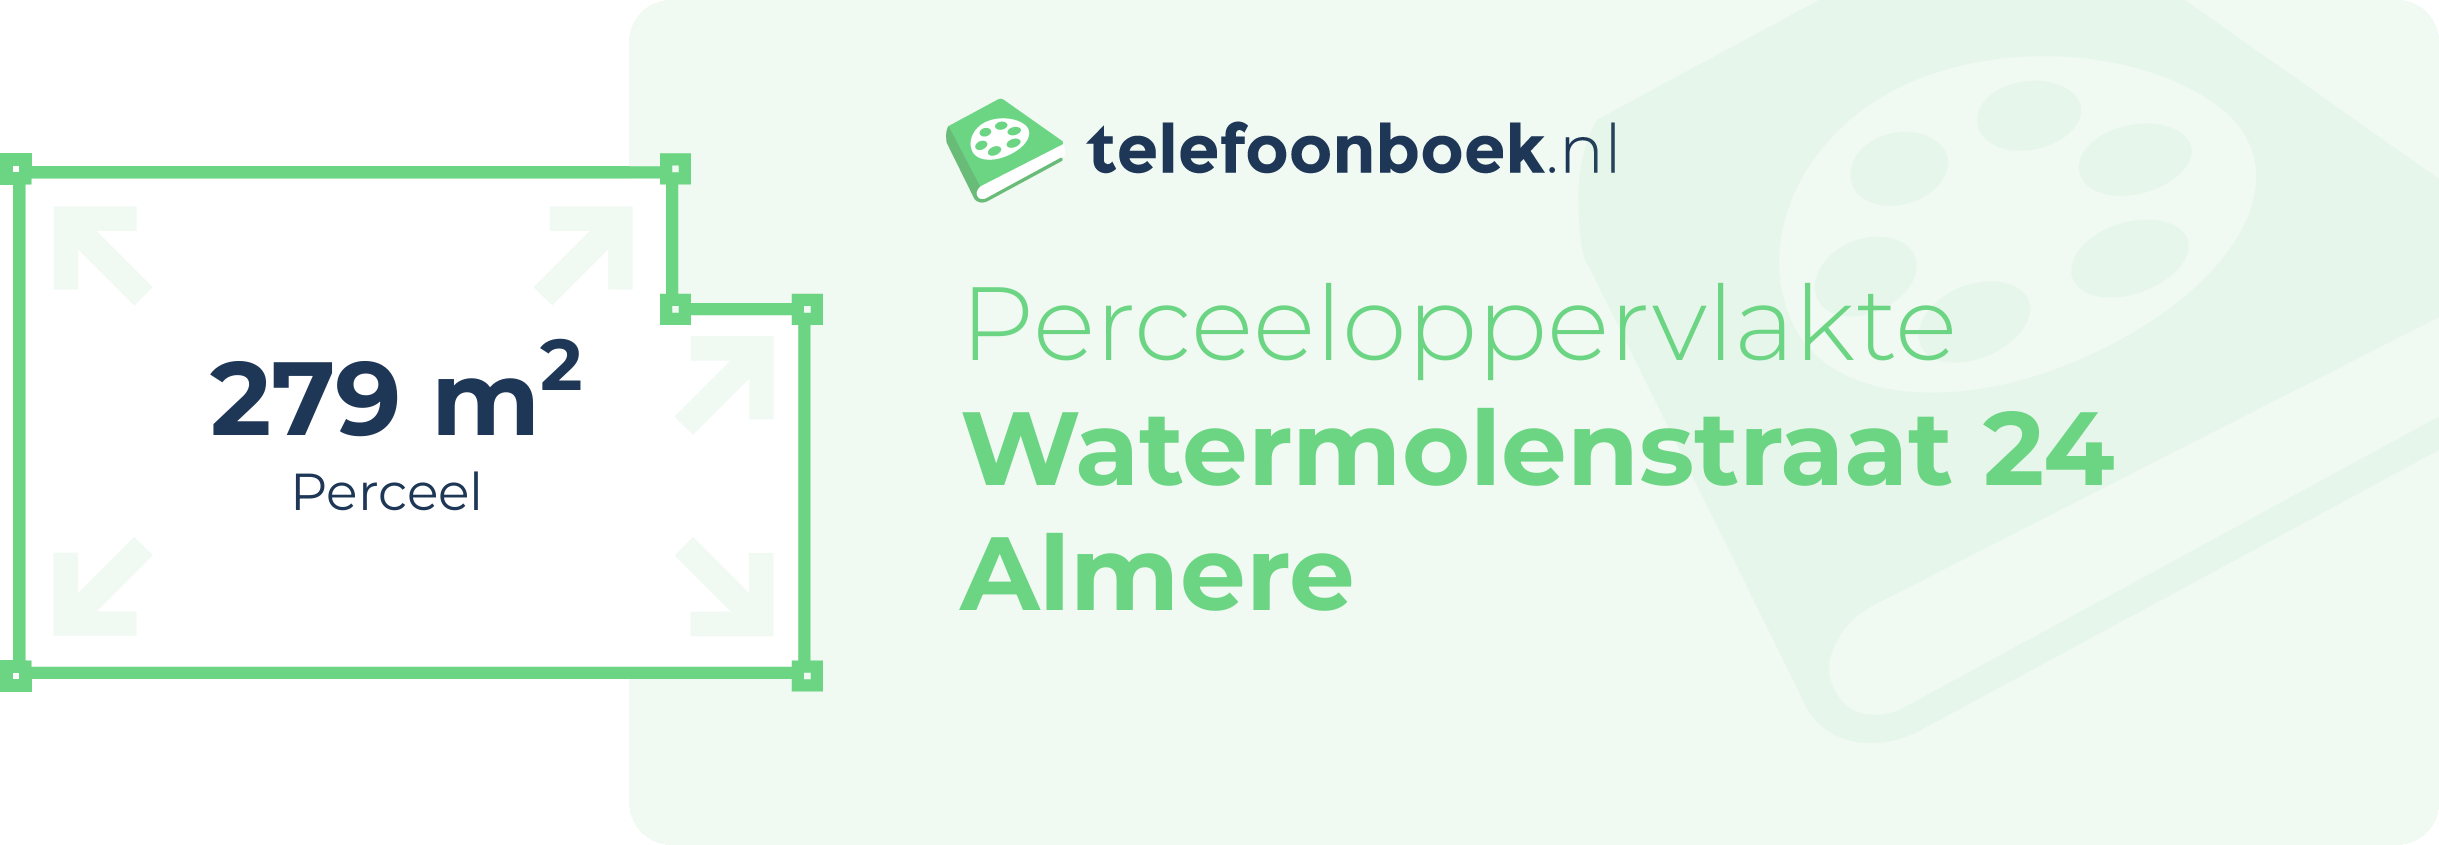 Perceeloppervlakte Watermolenstraat 24 Almere